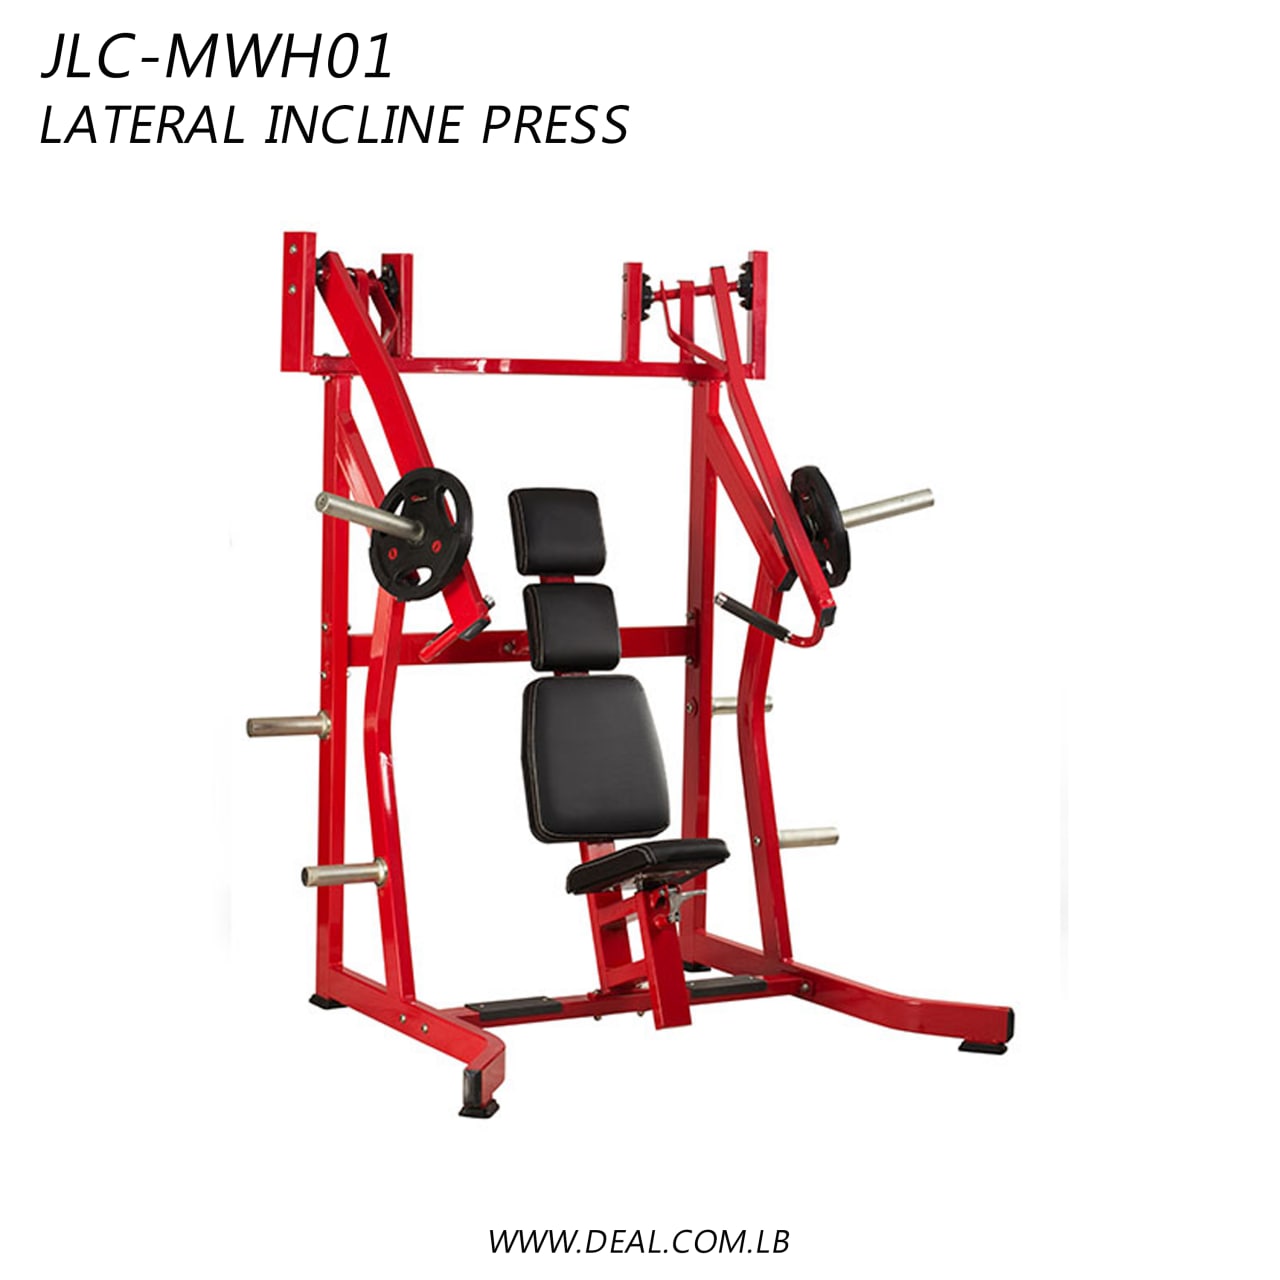 JLC-MWH01 | Lateral incline press